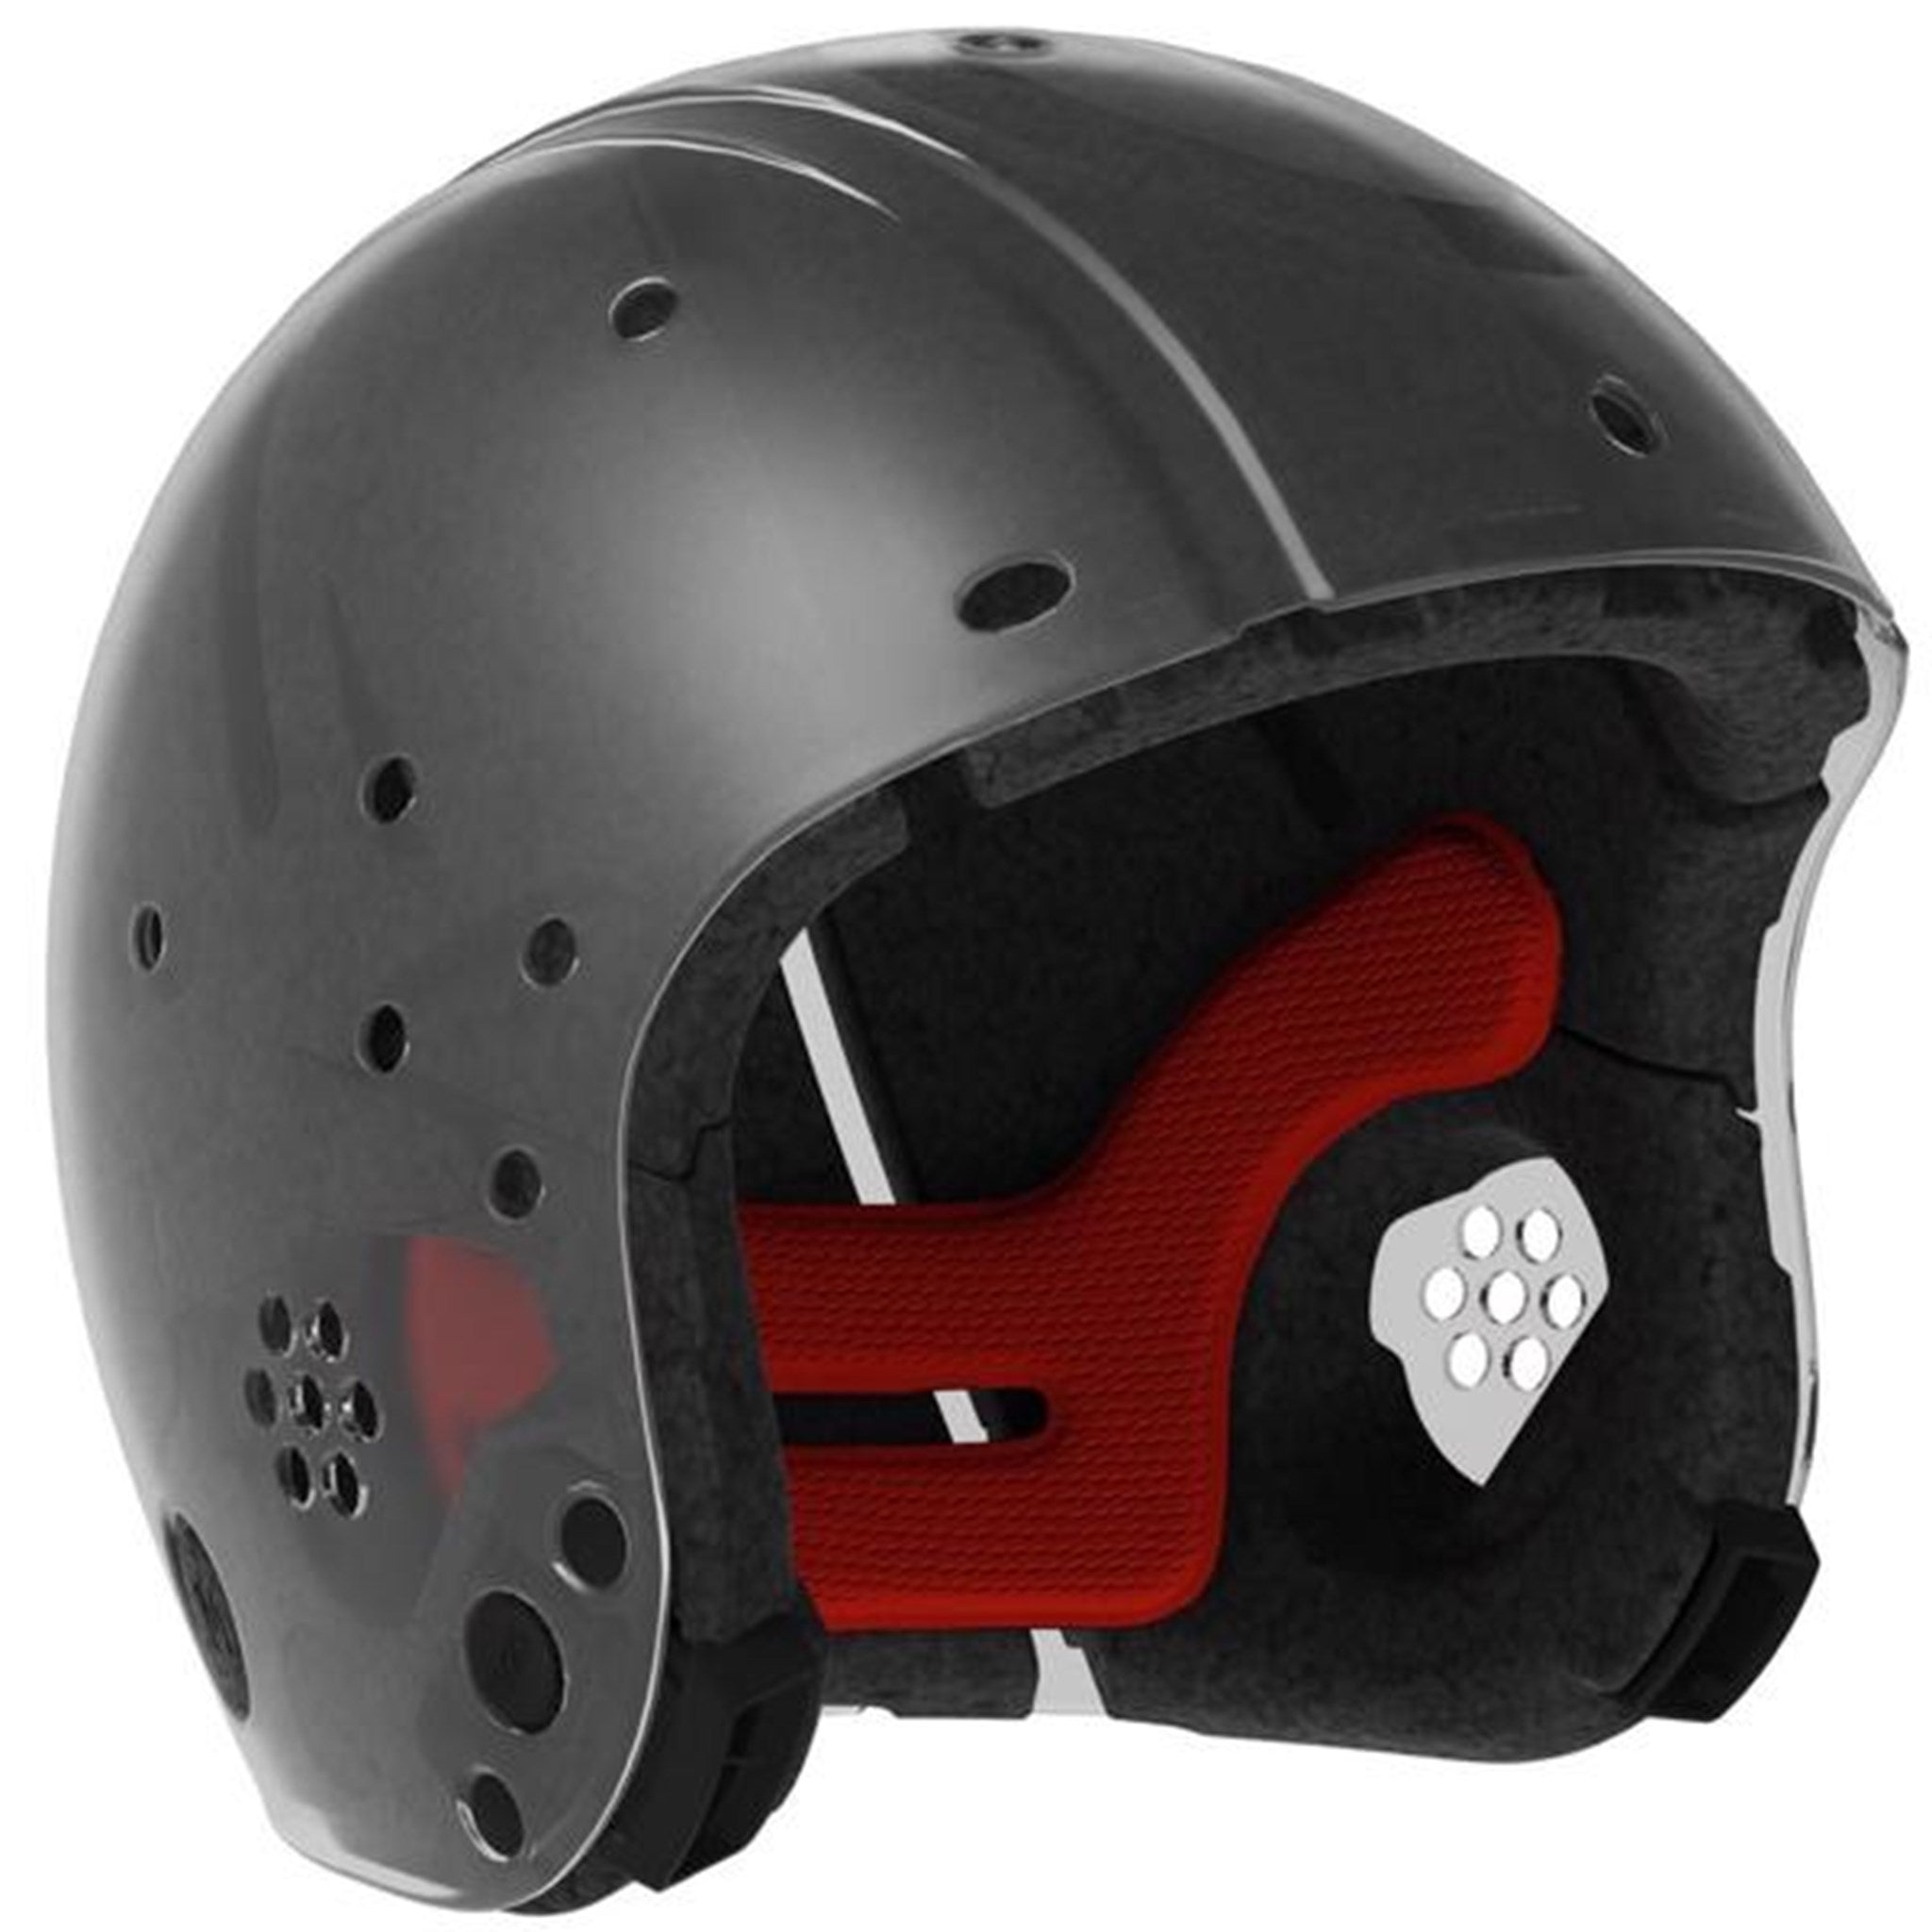 EGG 2 Multisport Helmet Transparent